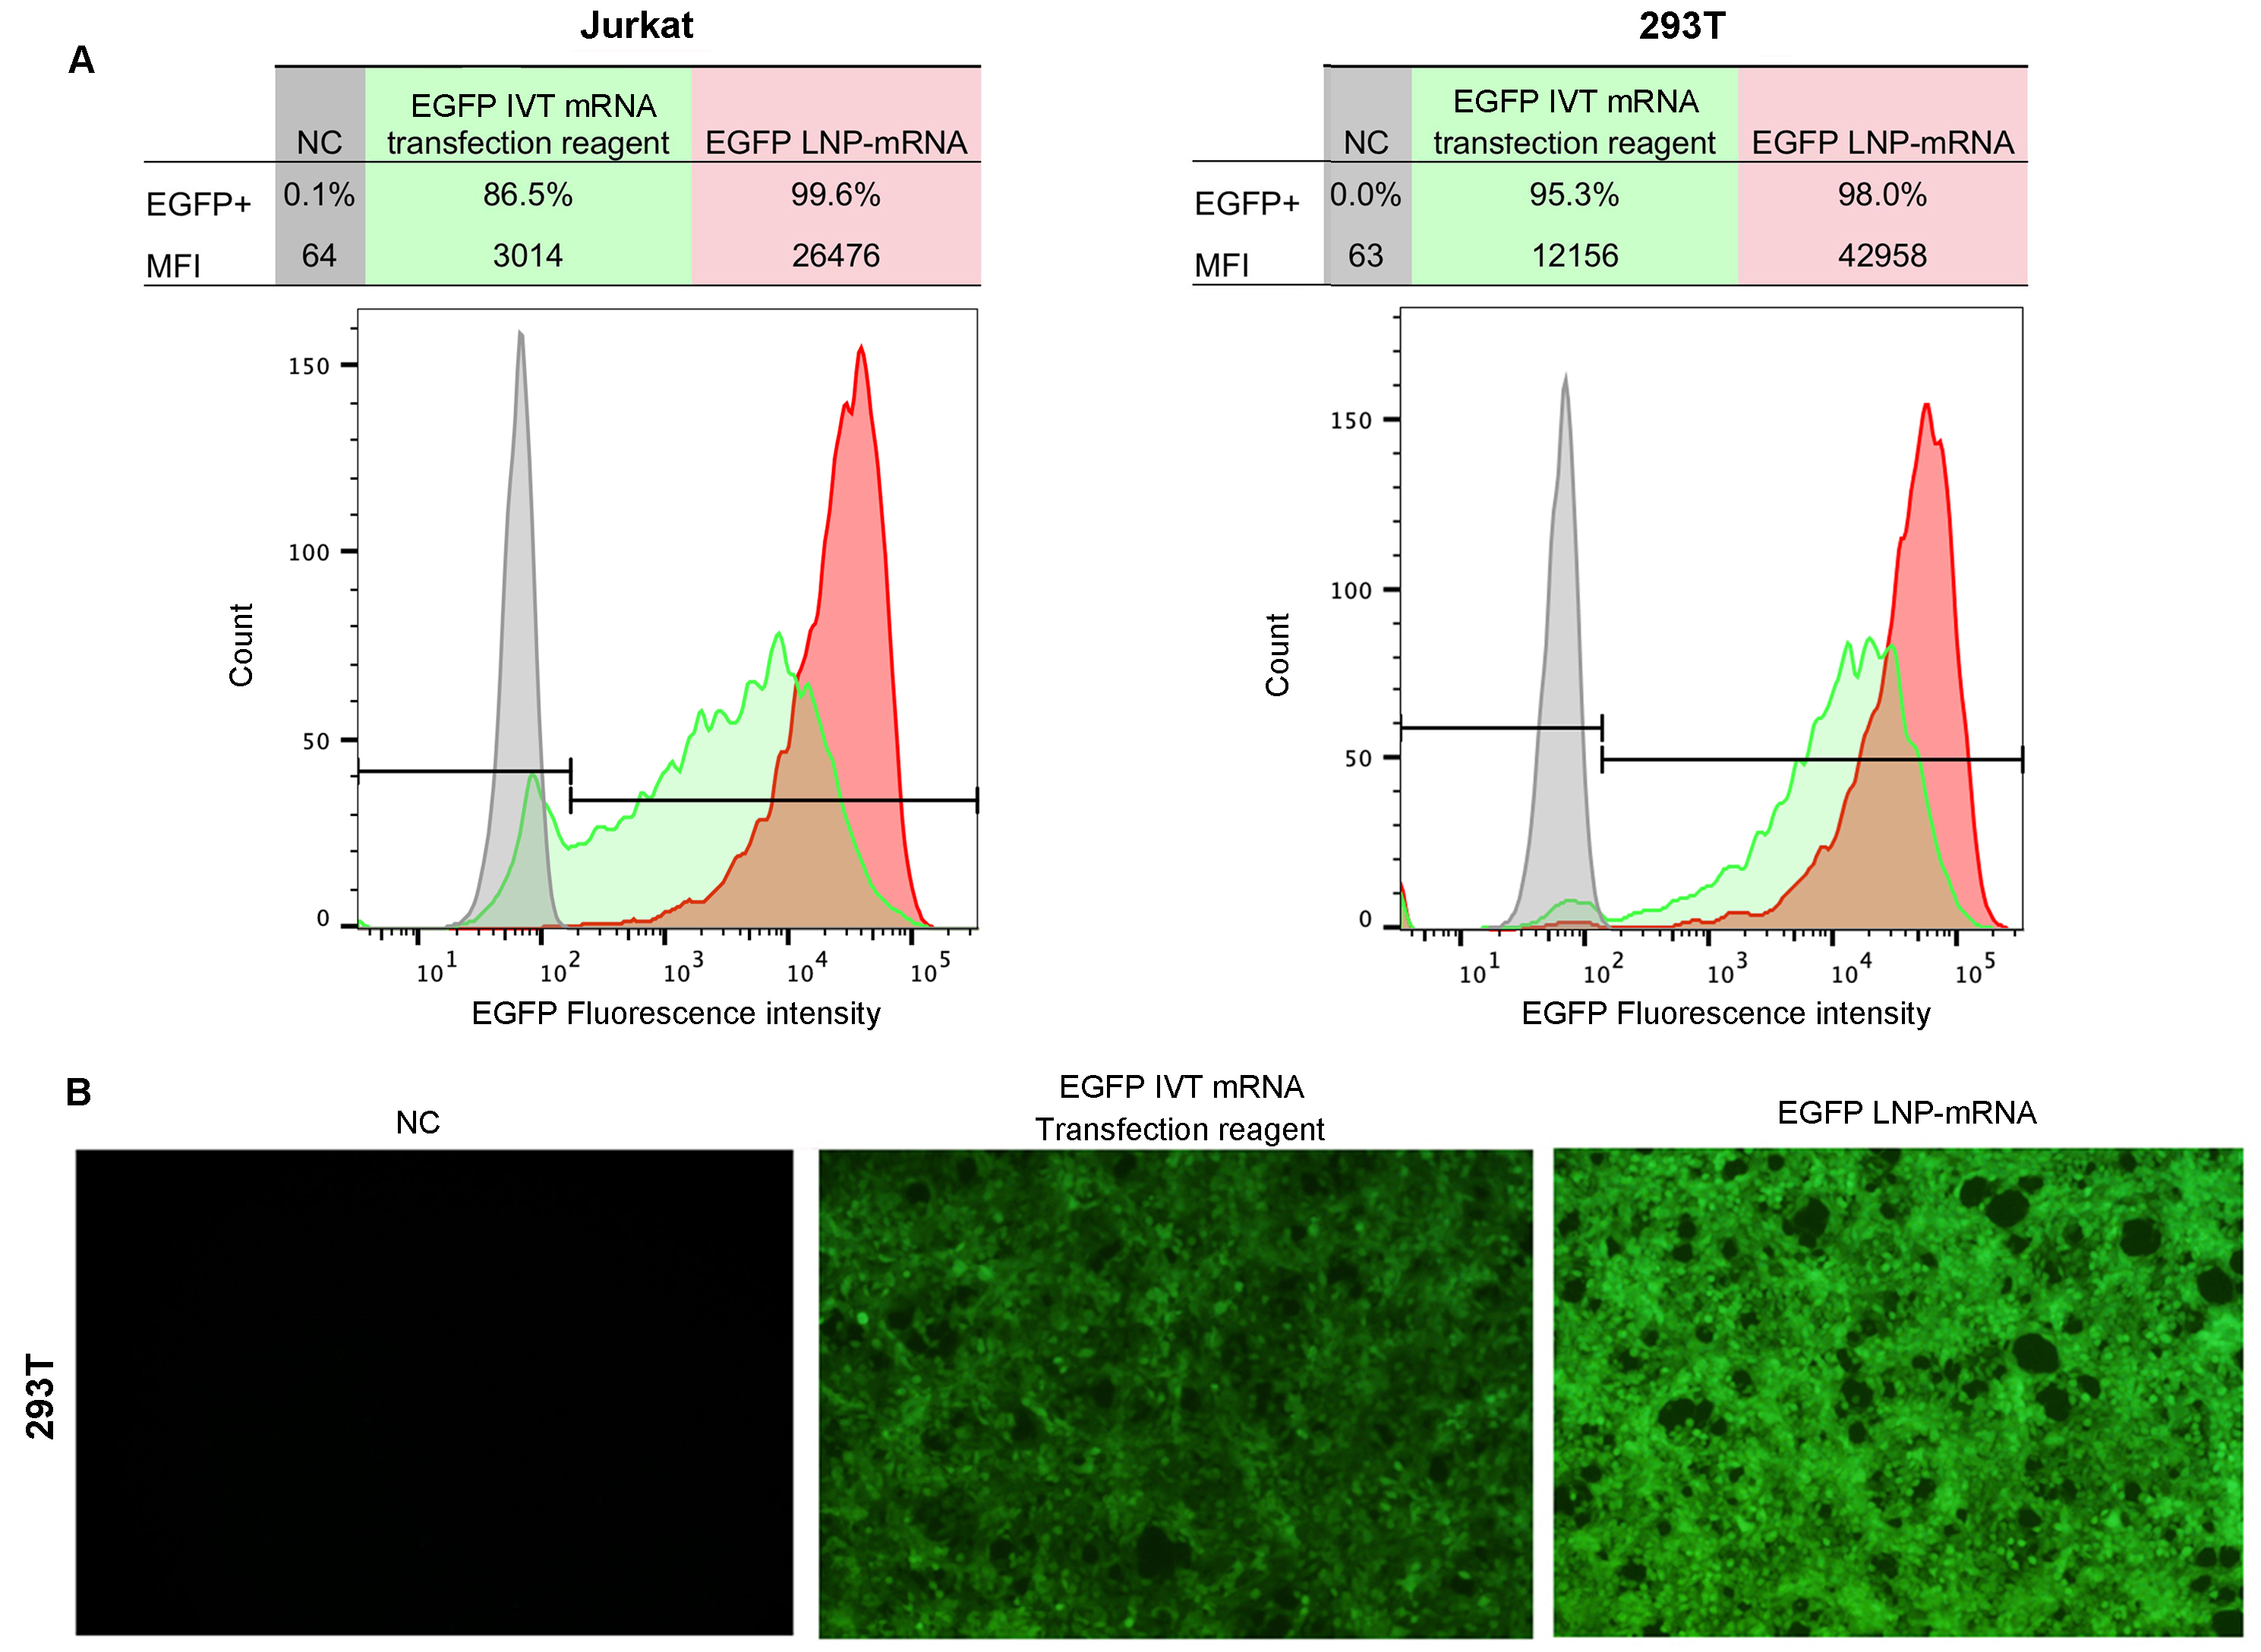 EGFP LNP-mRNA in vitro validation